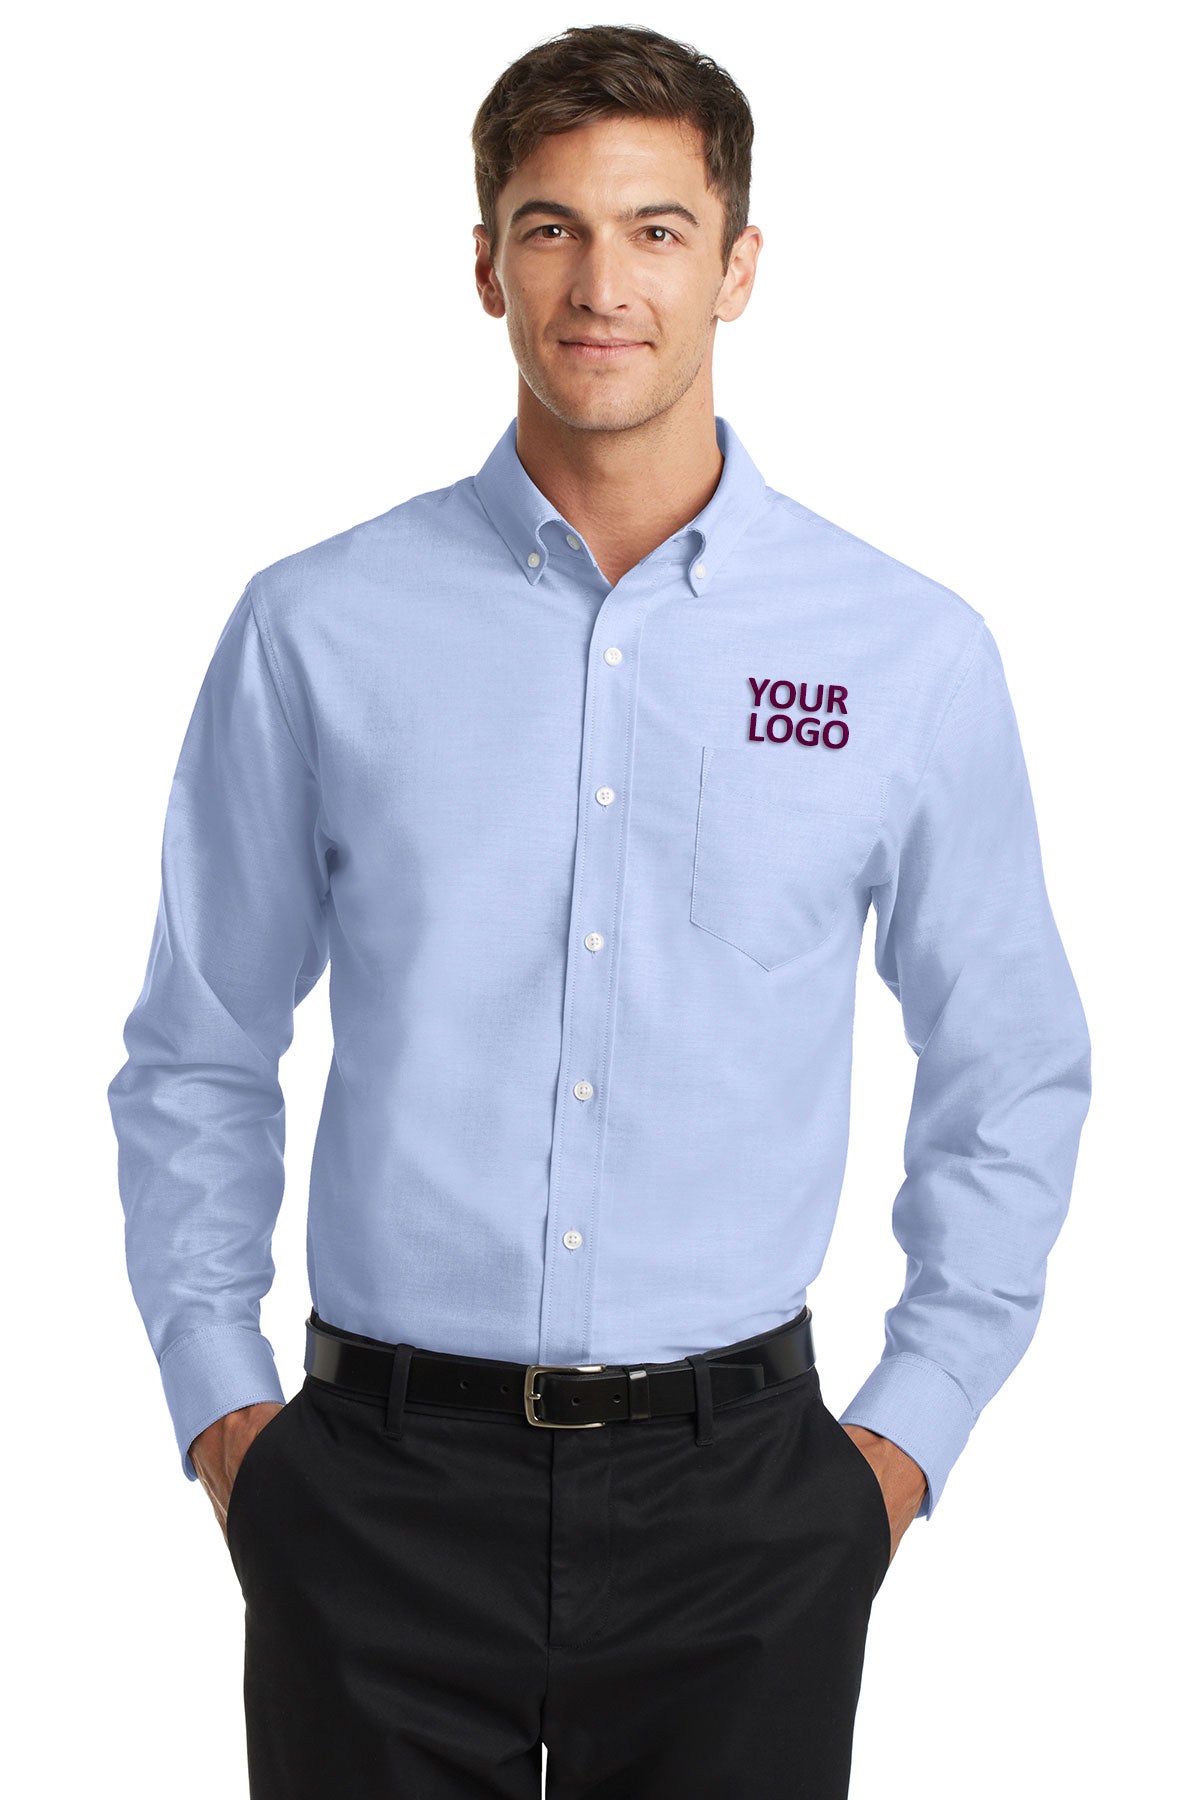 Port Authority Oxford Blue TS658 custom work shirts